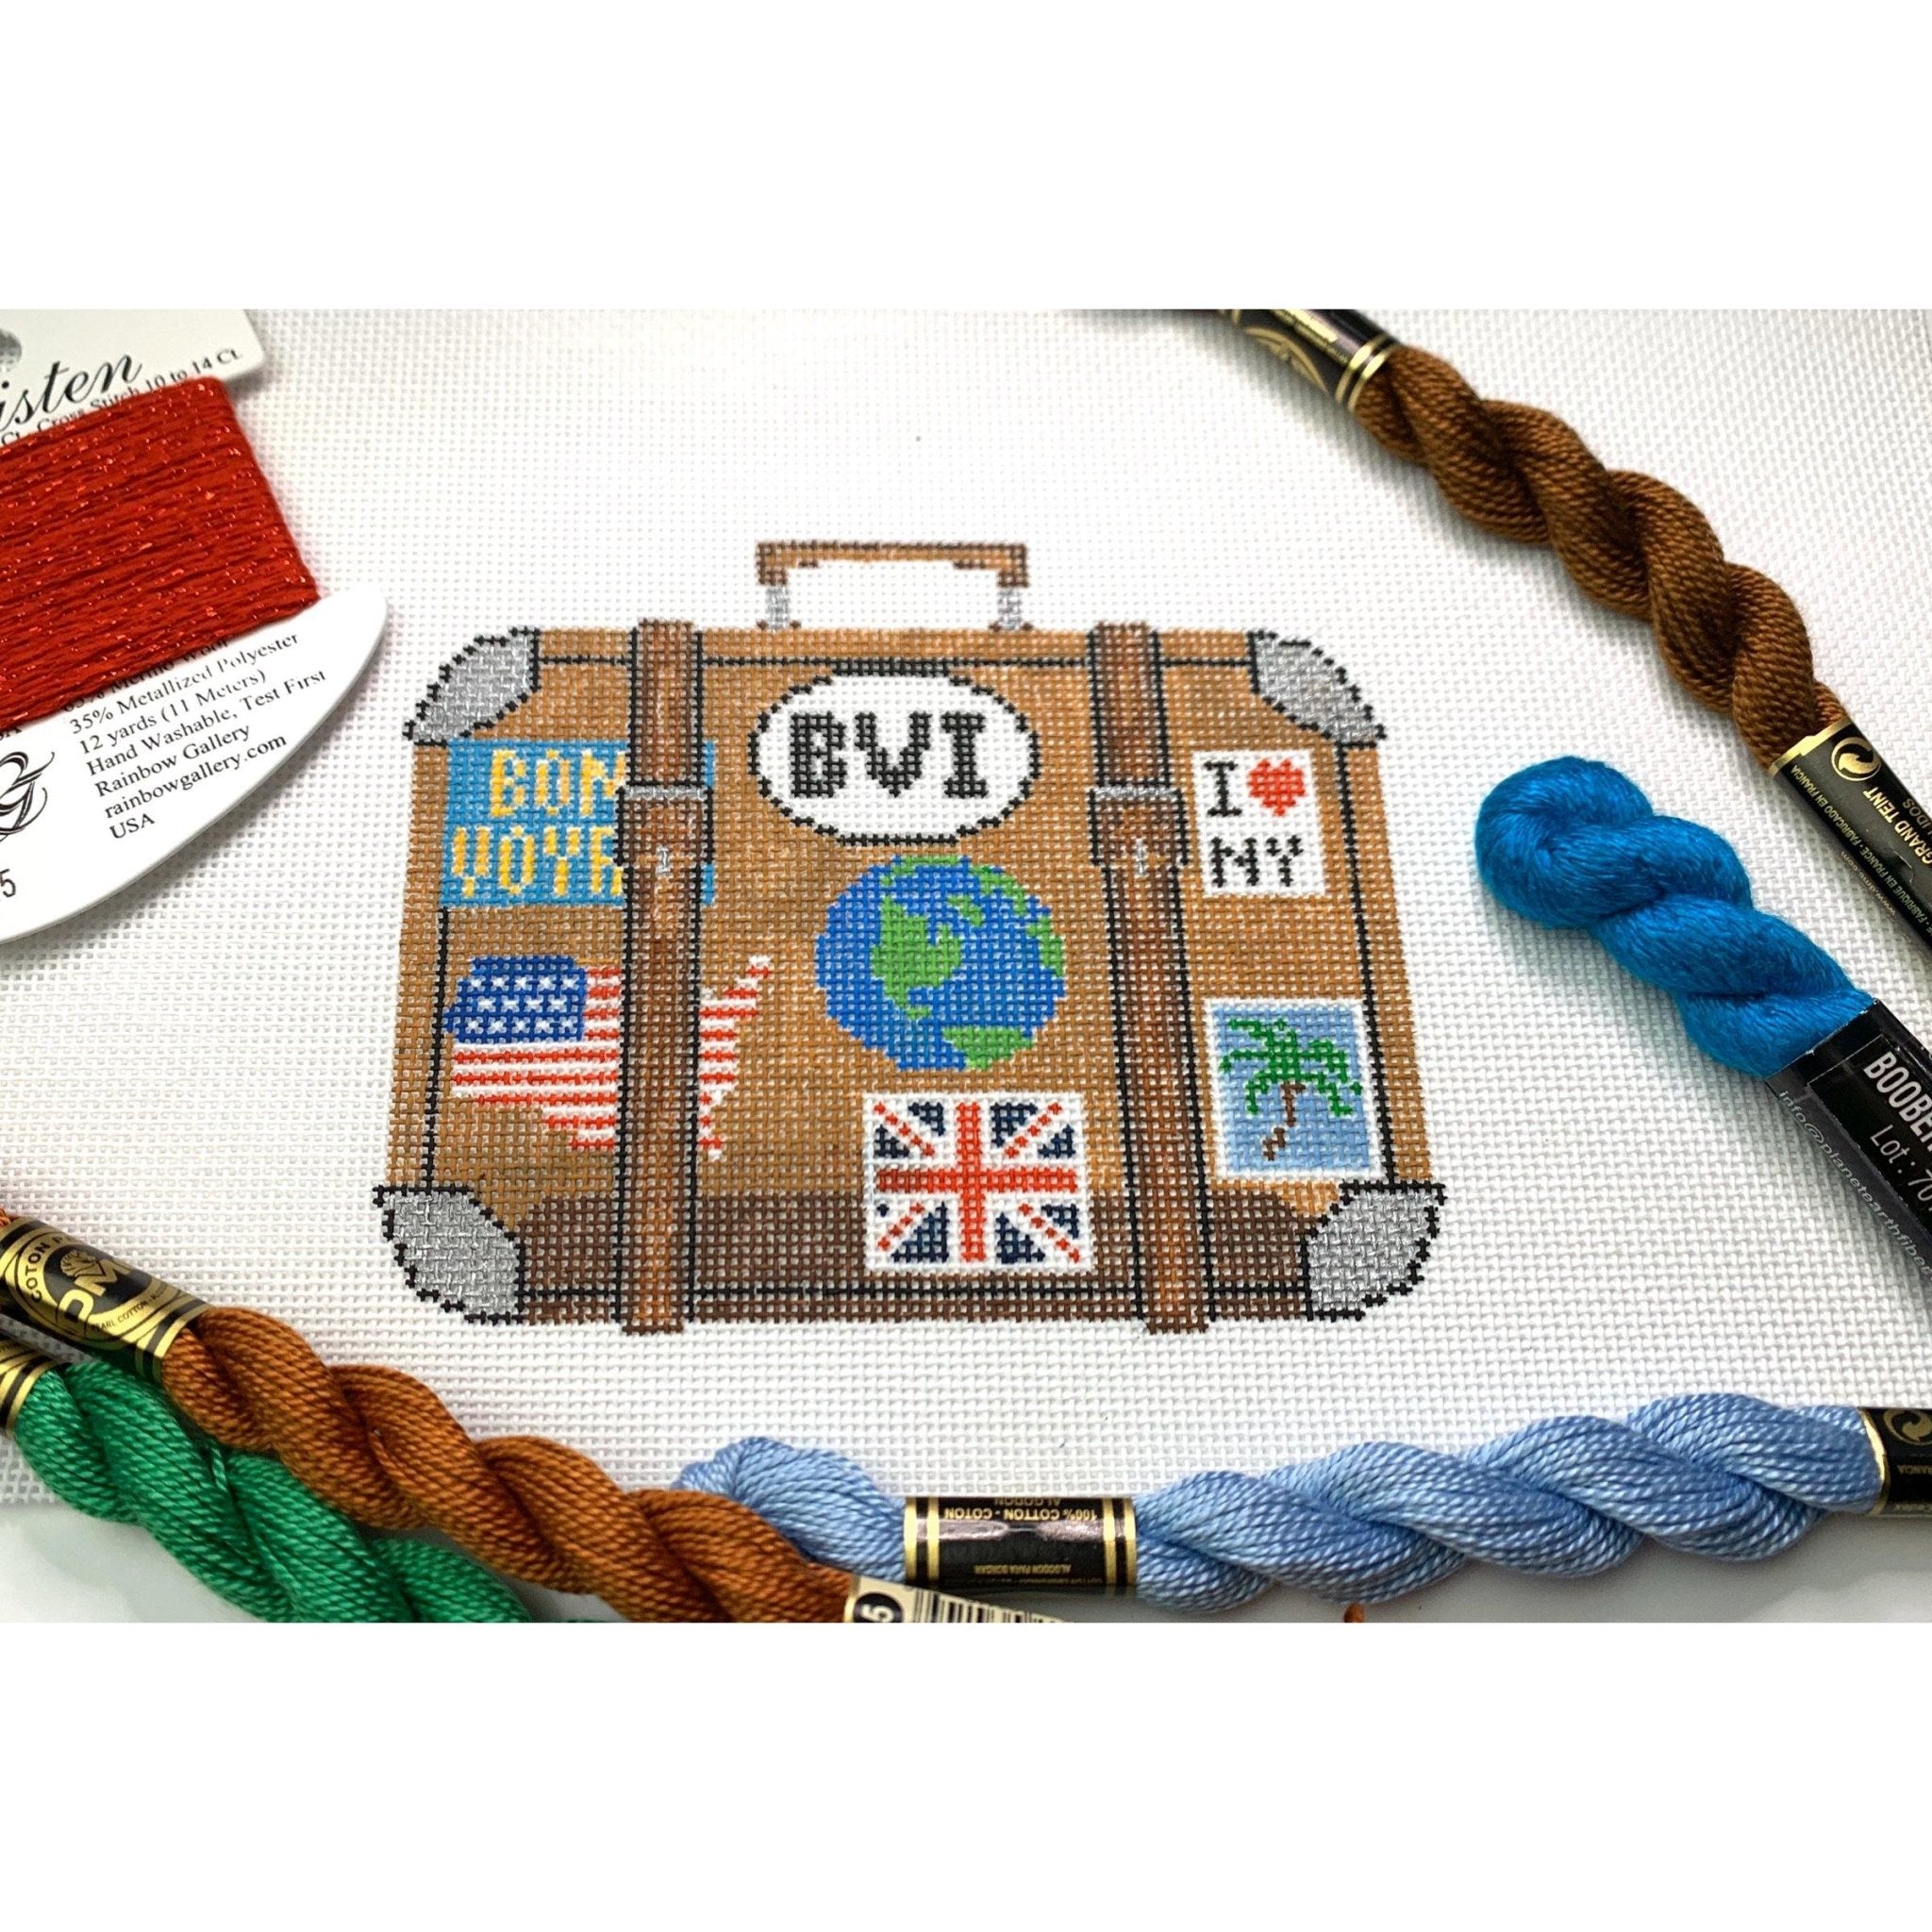 Travel suitcase needlepoint canvas - Needlepoint by Laura